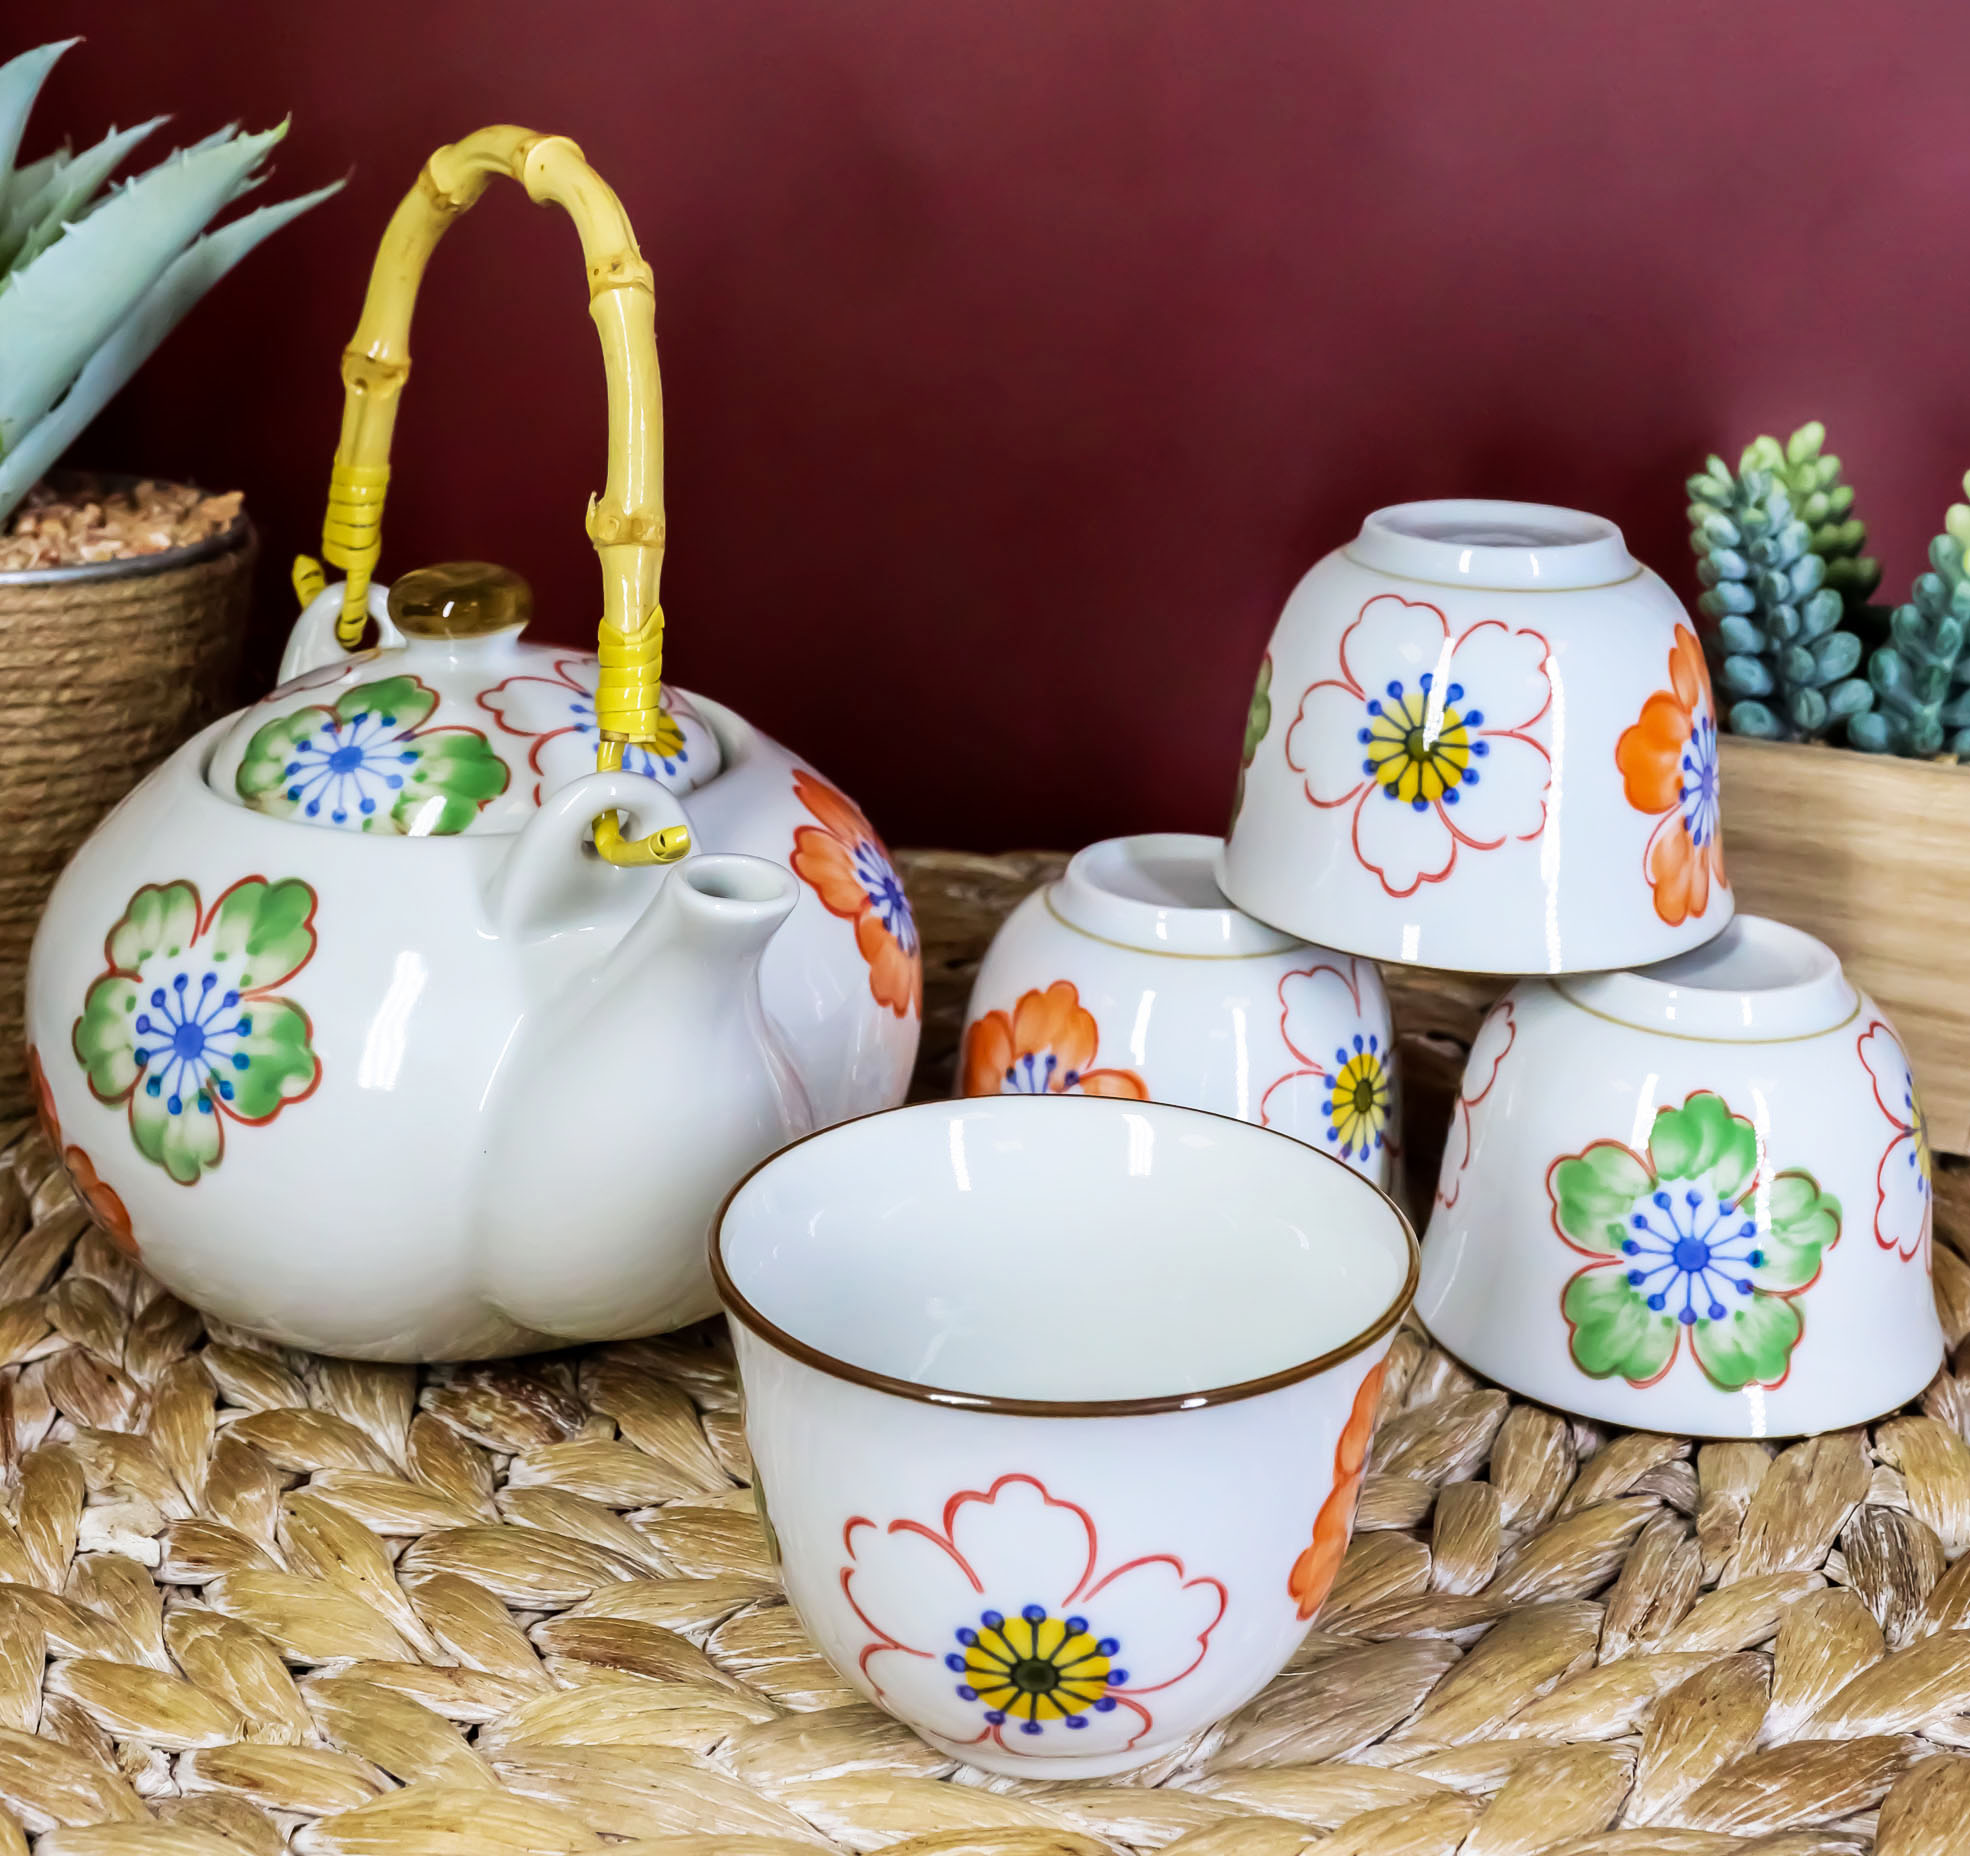 Japanese Design Colorful Botanic Floral Porcelain White Tea Pot And Cups Set - image 1 of 8